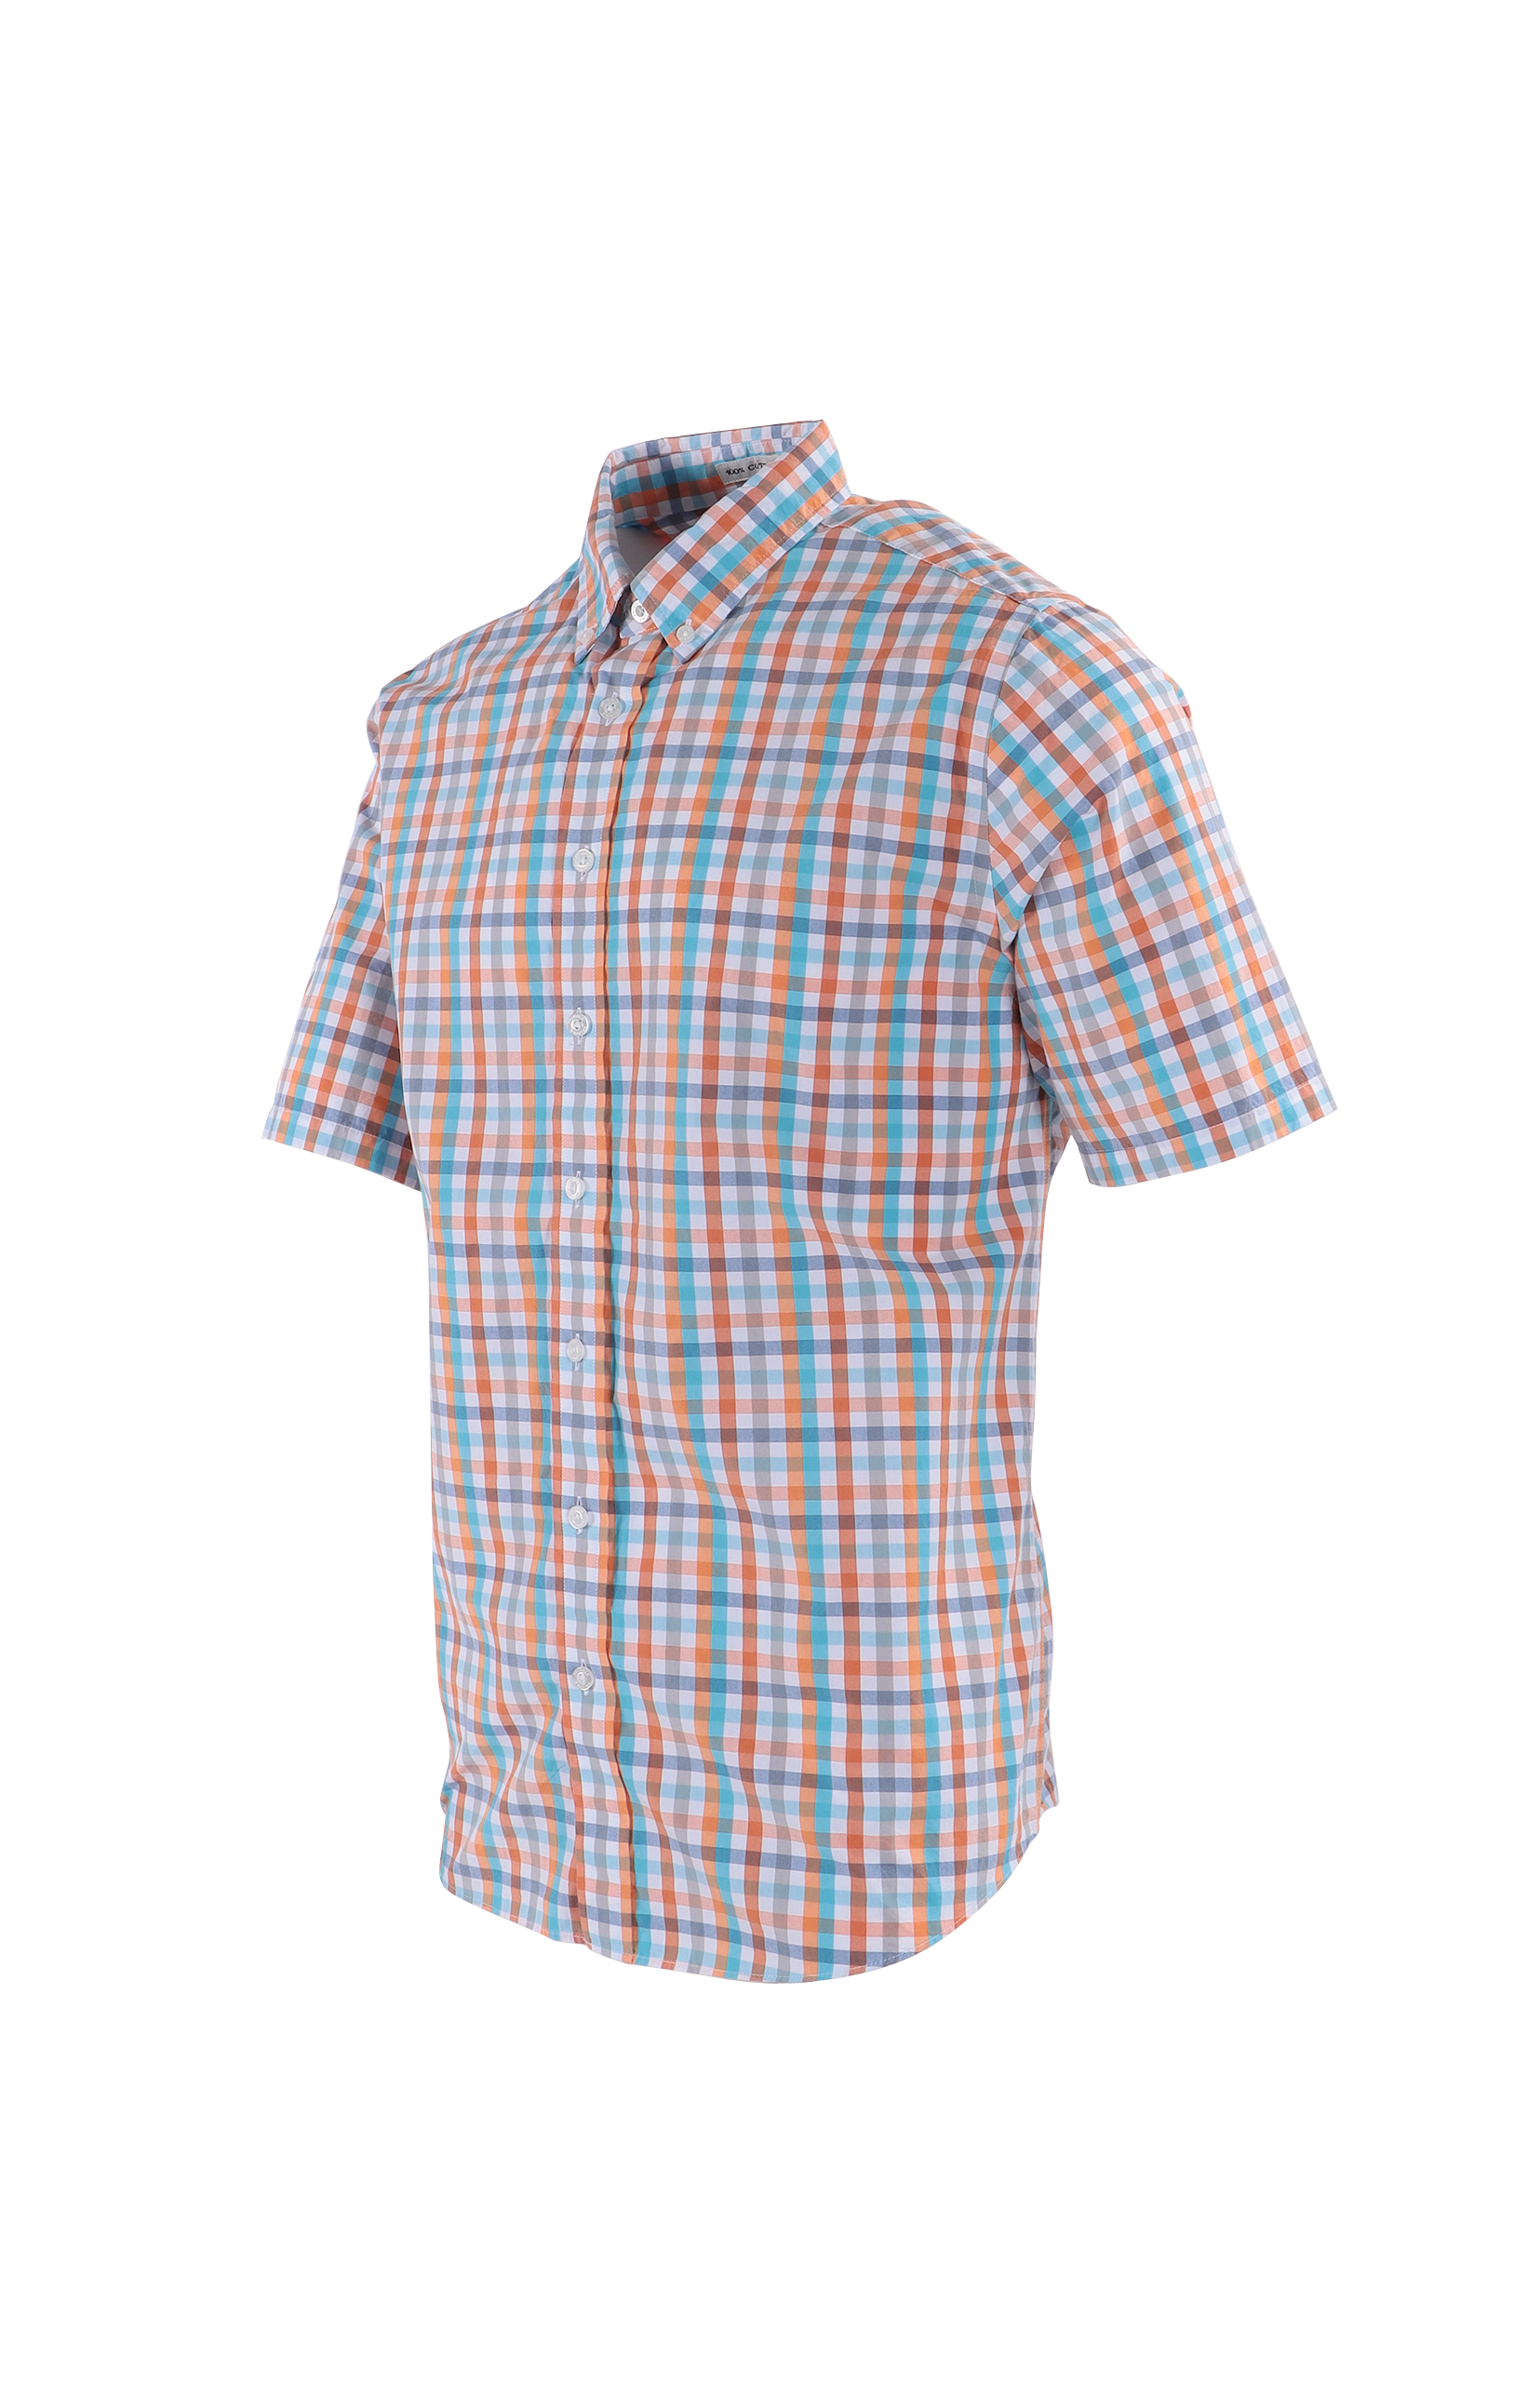 Pringle Hutton S/S classic shirt men’s - Frontierco